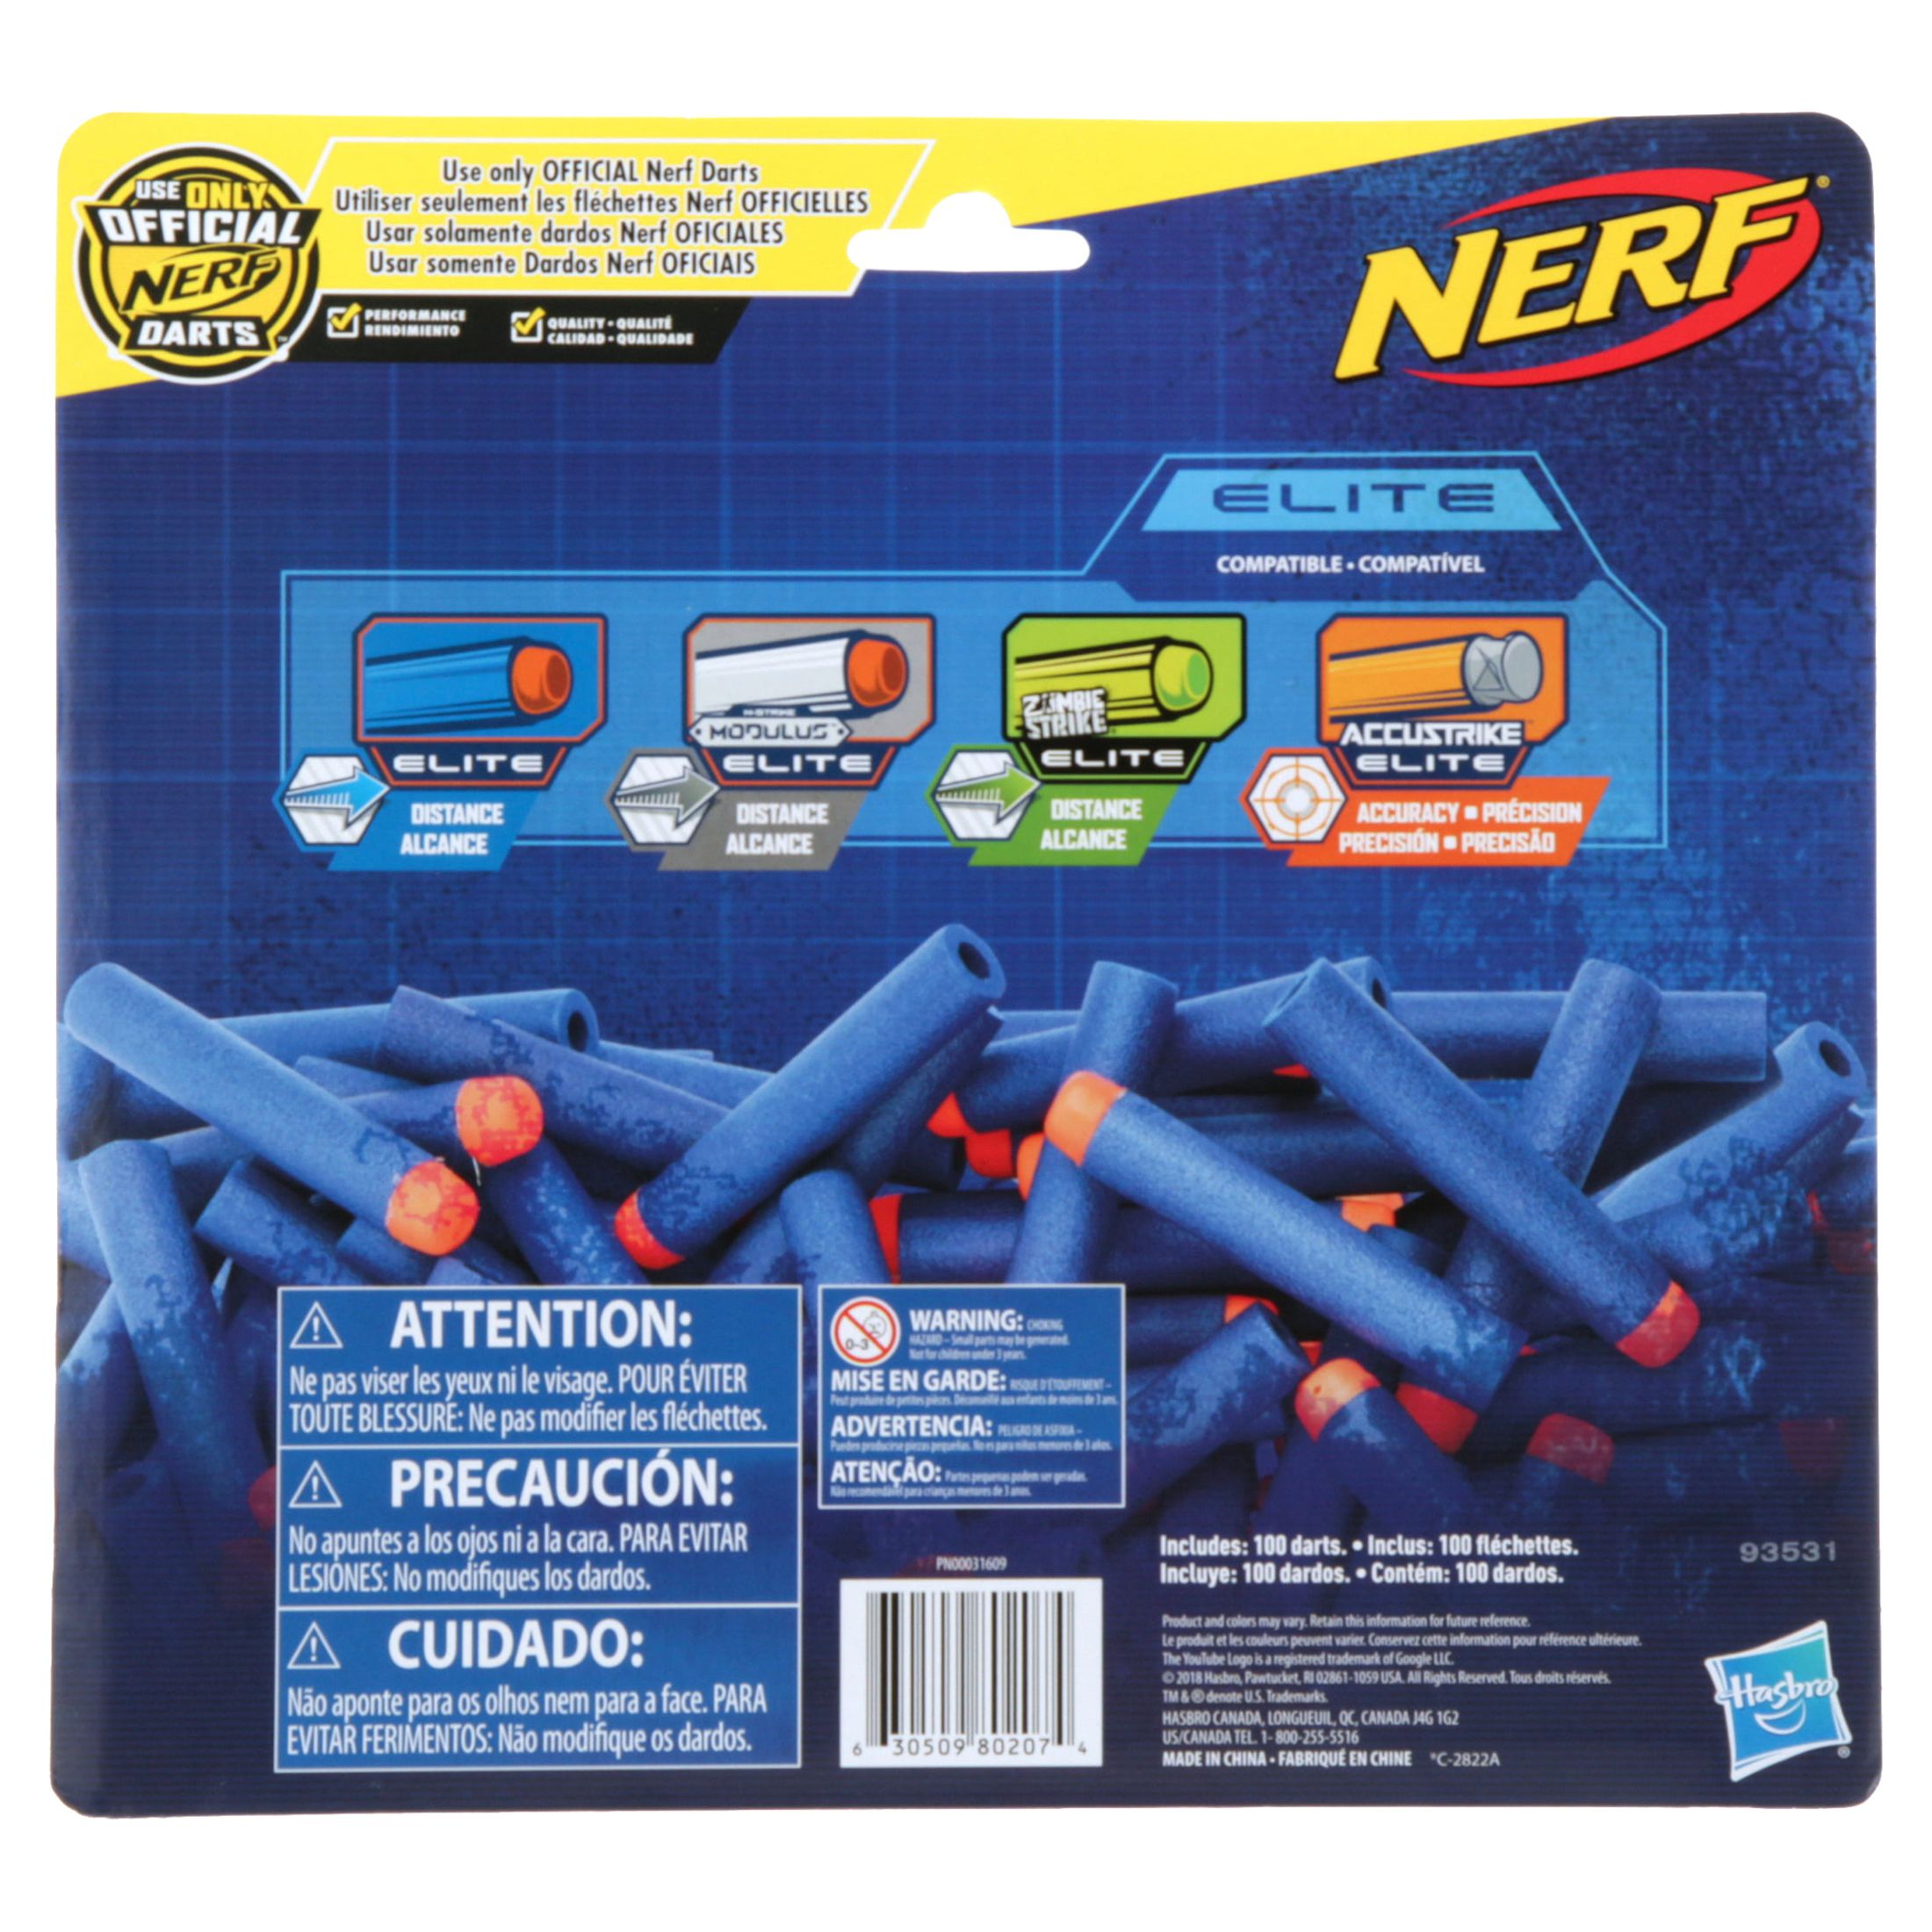 Nerf N-Strike Elite Kids Toy Blaster Refill with 100 Darts - image 3 of 7